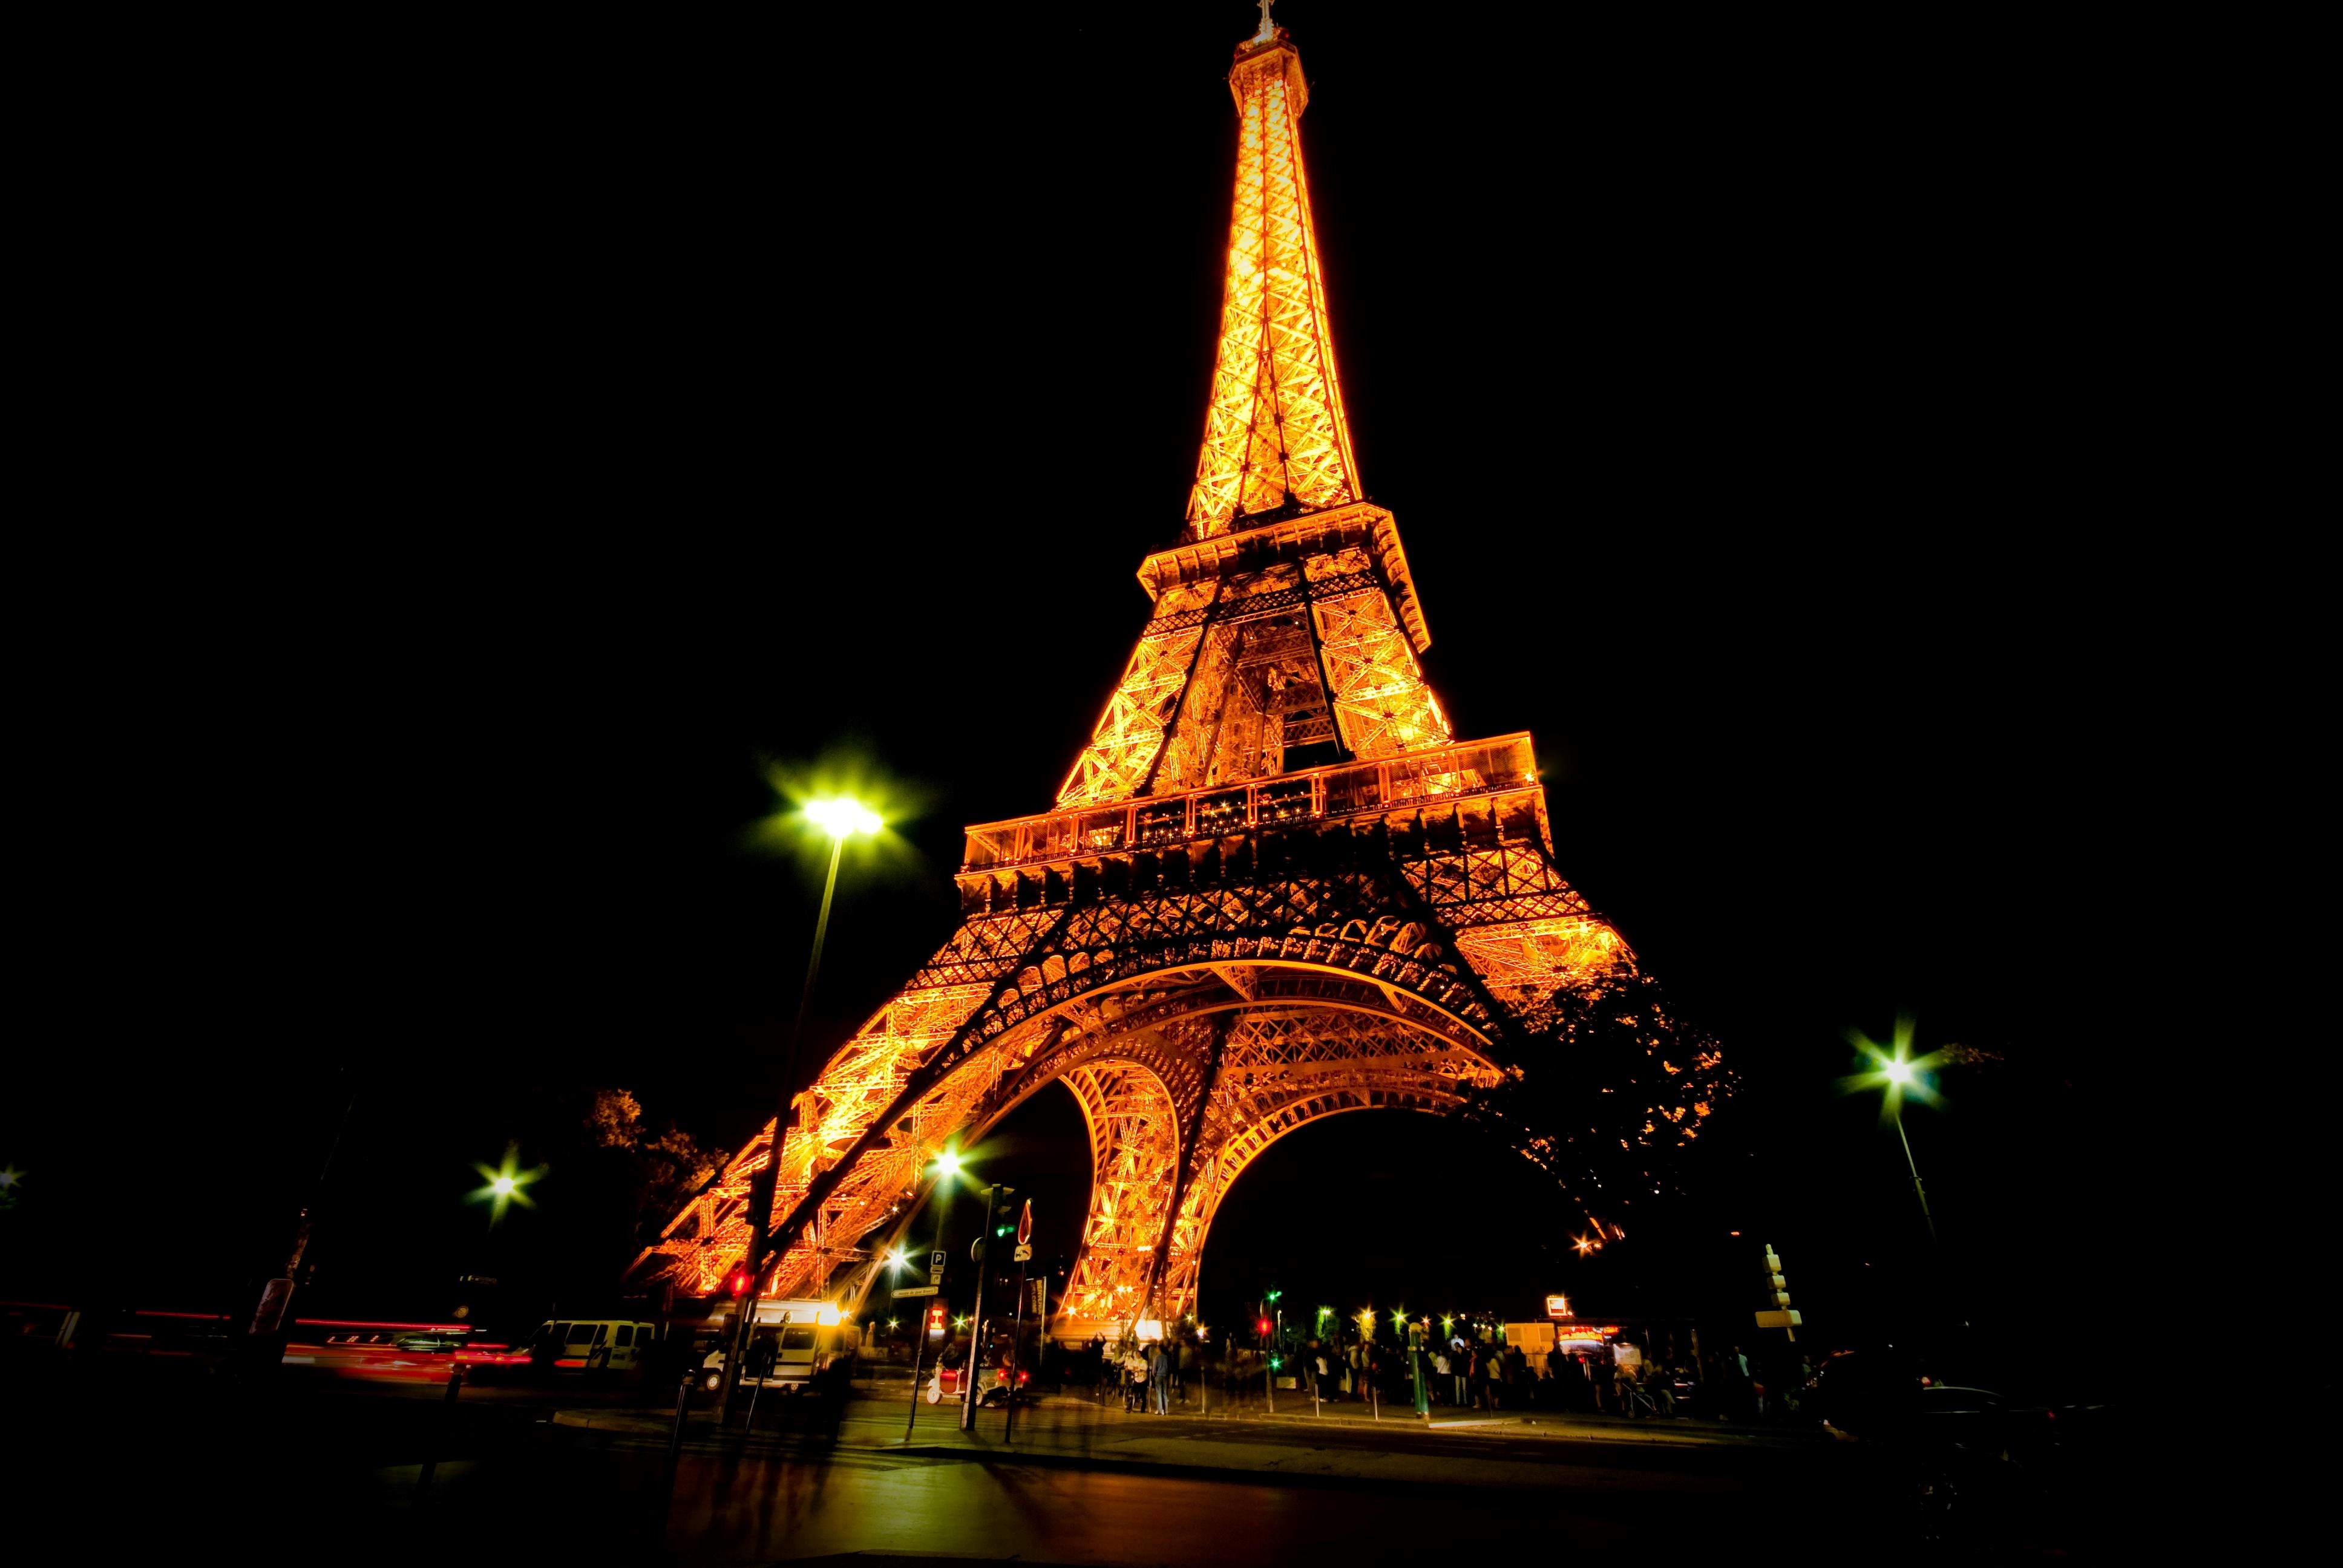 [72+] Eiffel Tower At Night Wallpaper on WallpaperSafari